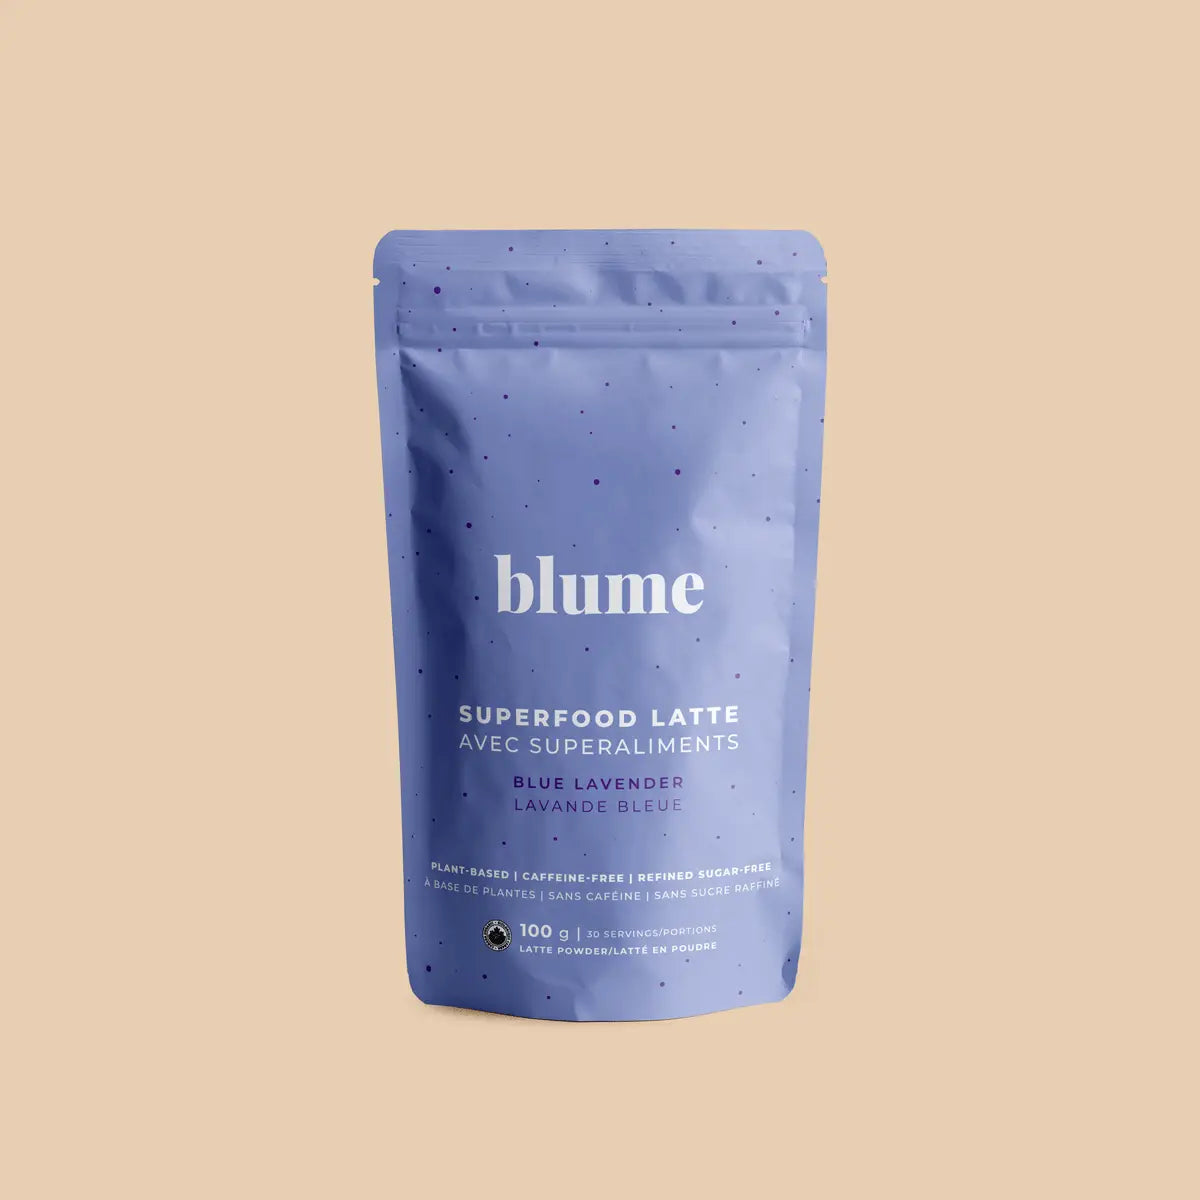 Blue Lavender Superfood latte powder